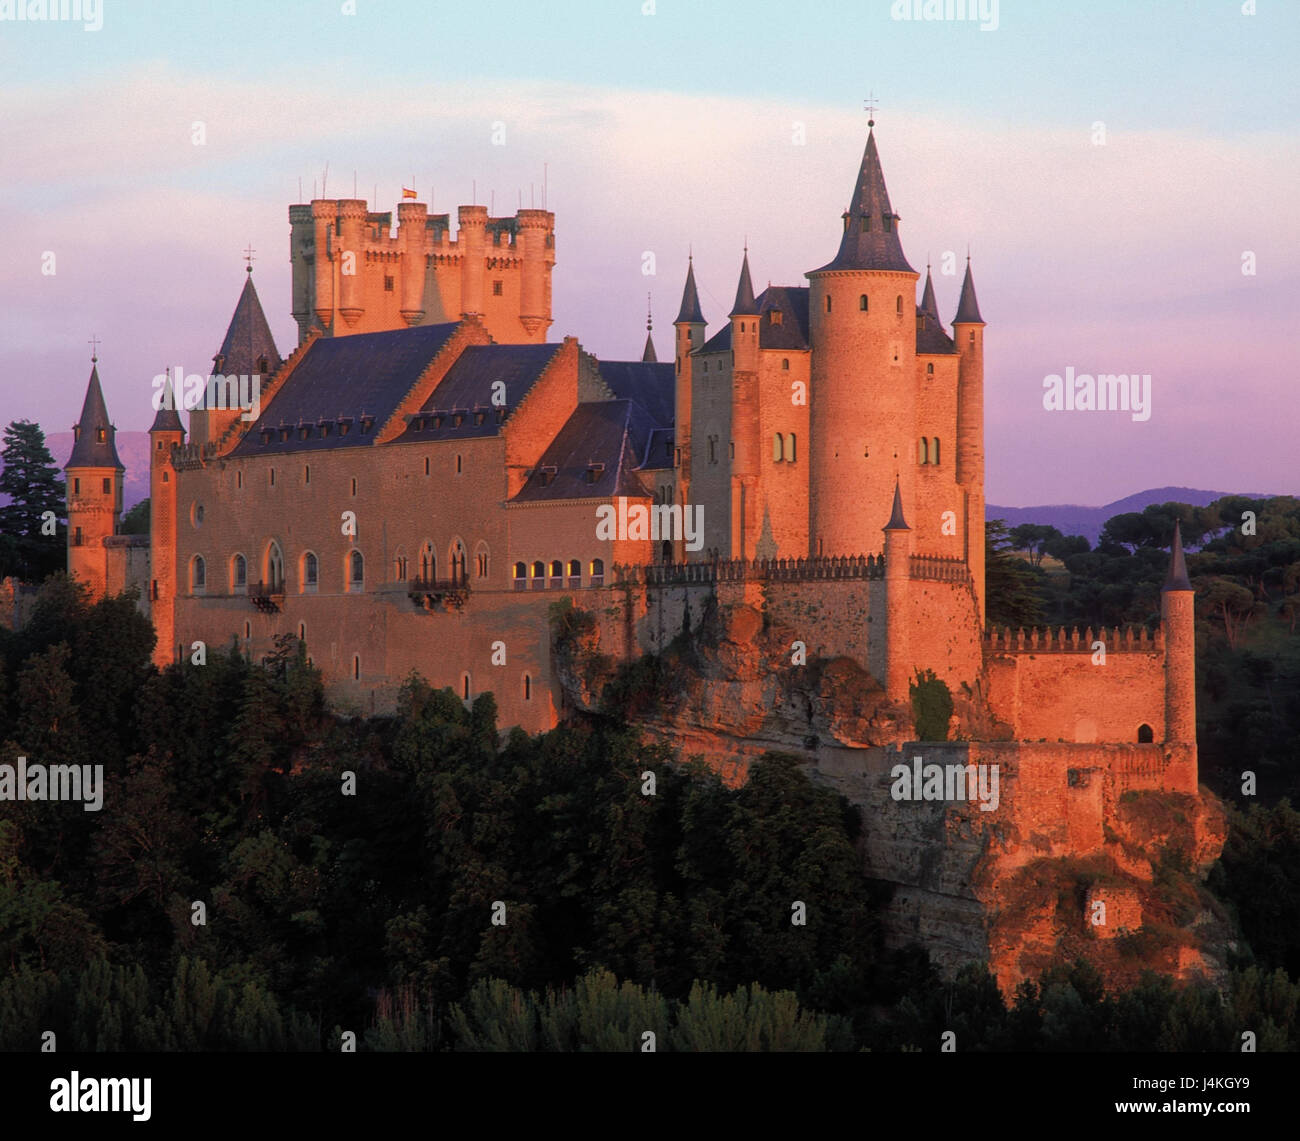 Spain, Castile, Segovia, castle Alcazar, evening light sundown, lock, region Castile and Leon, 11. Cent. inherit., 13. Cent. anew inherit., 16.-16 cent. erweritert Stock Photo